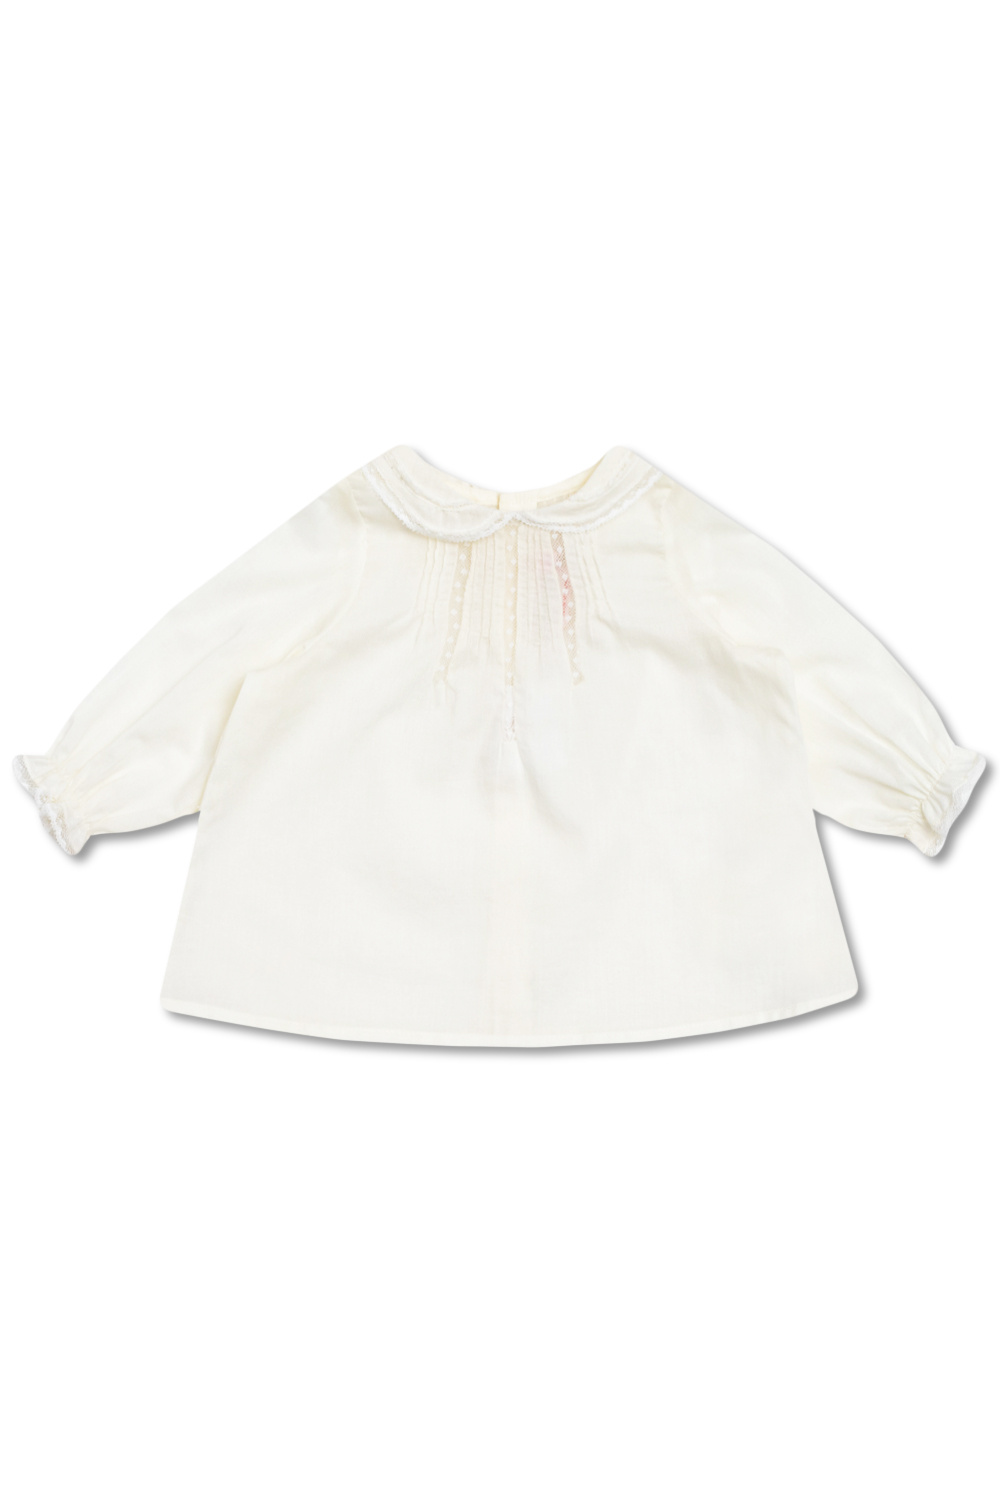 Bonpoint Bonpoint Baby Boy White Cotton Dress Shirt Long Sleeve 6m 6 months 